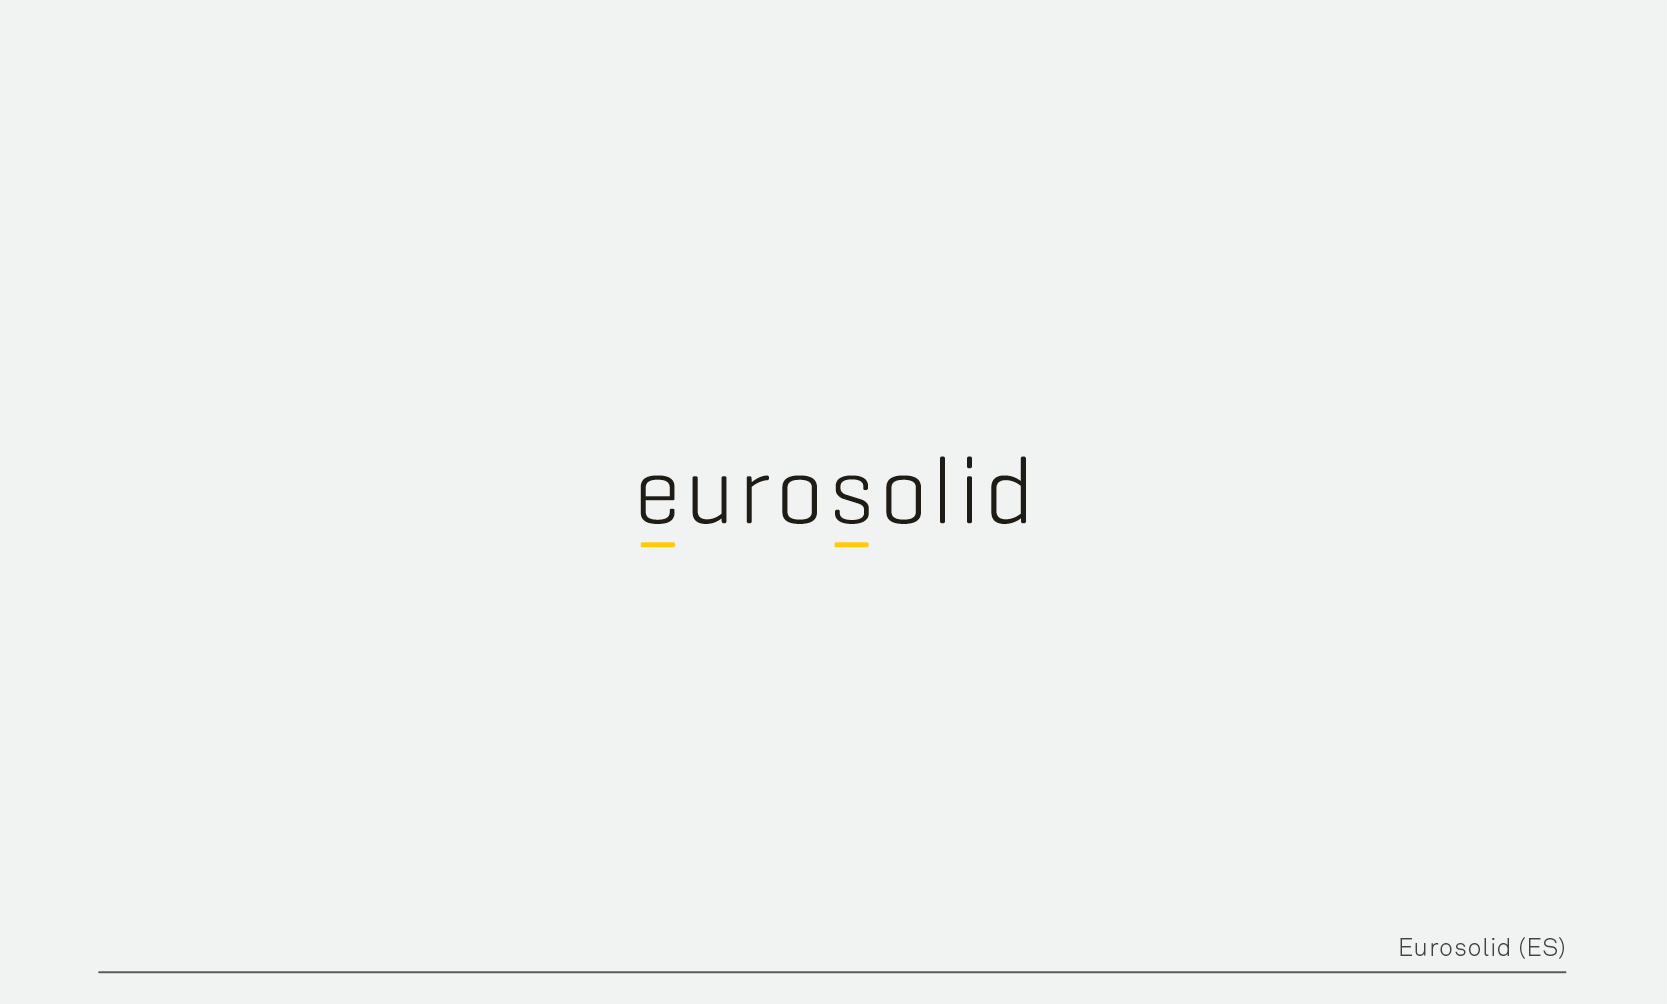 Eurosolid